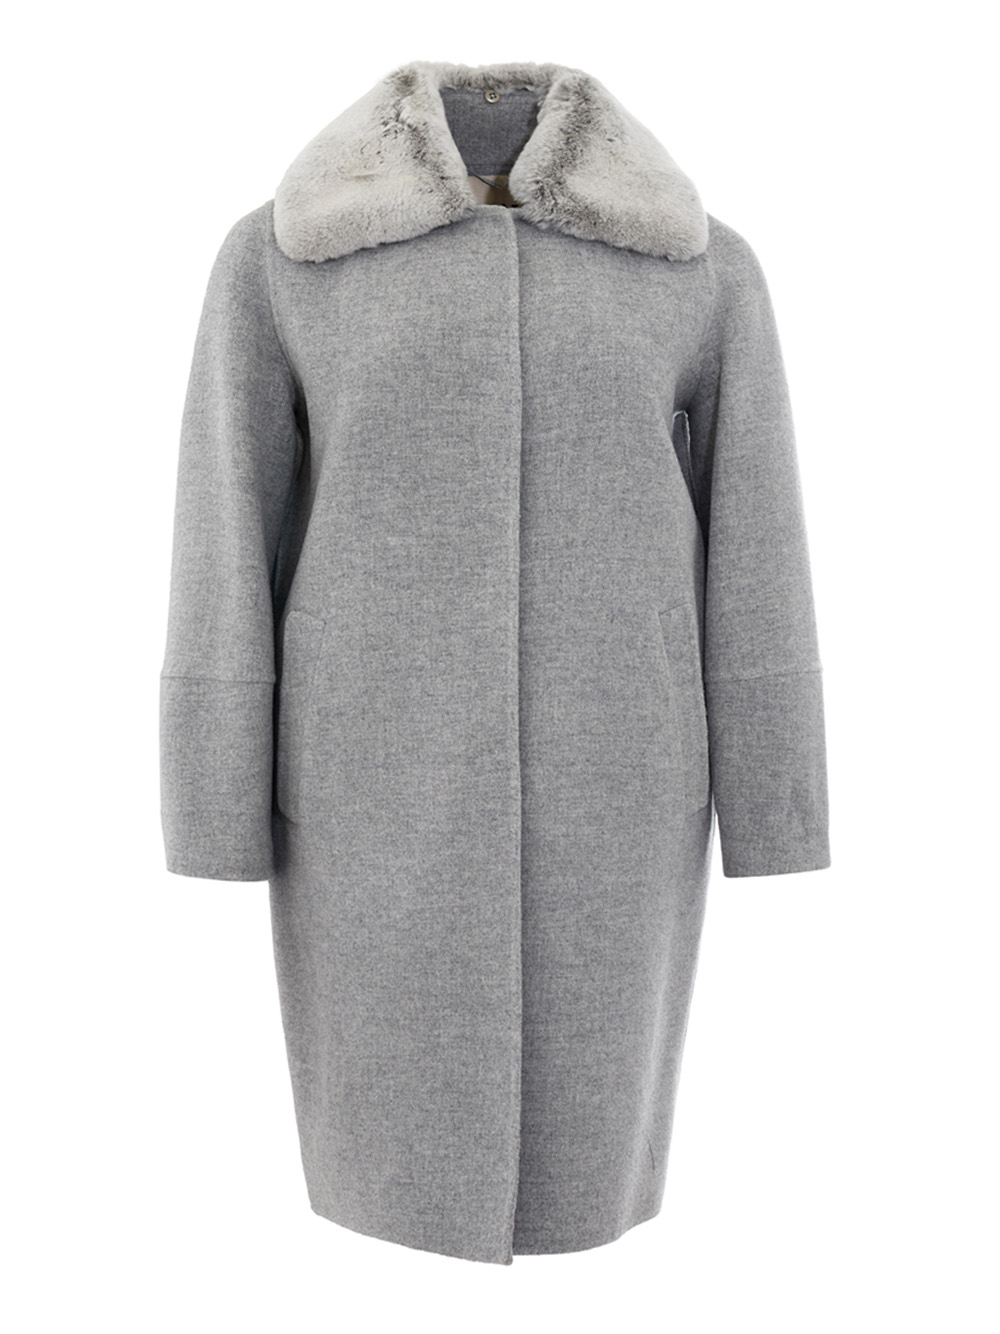 Wool Coat with Fur Collar